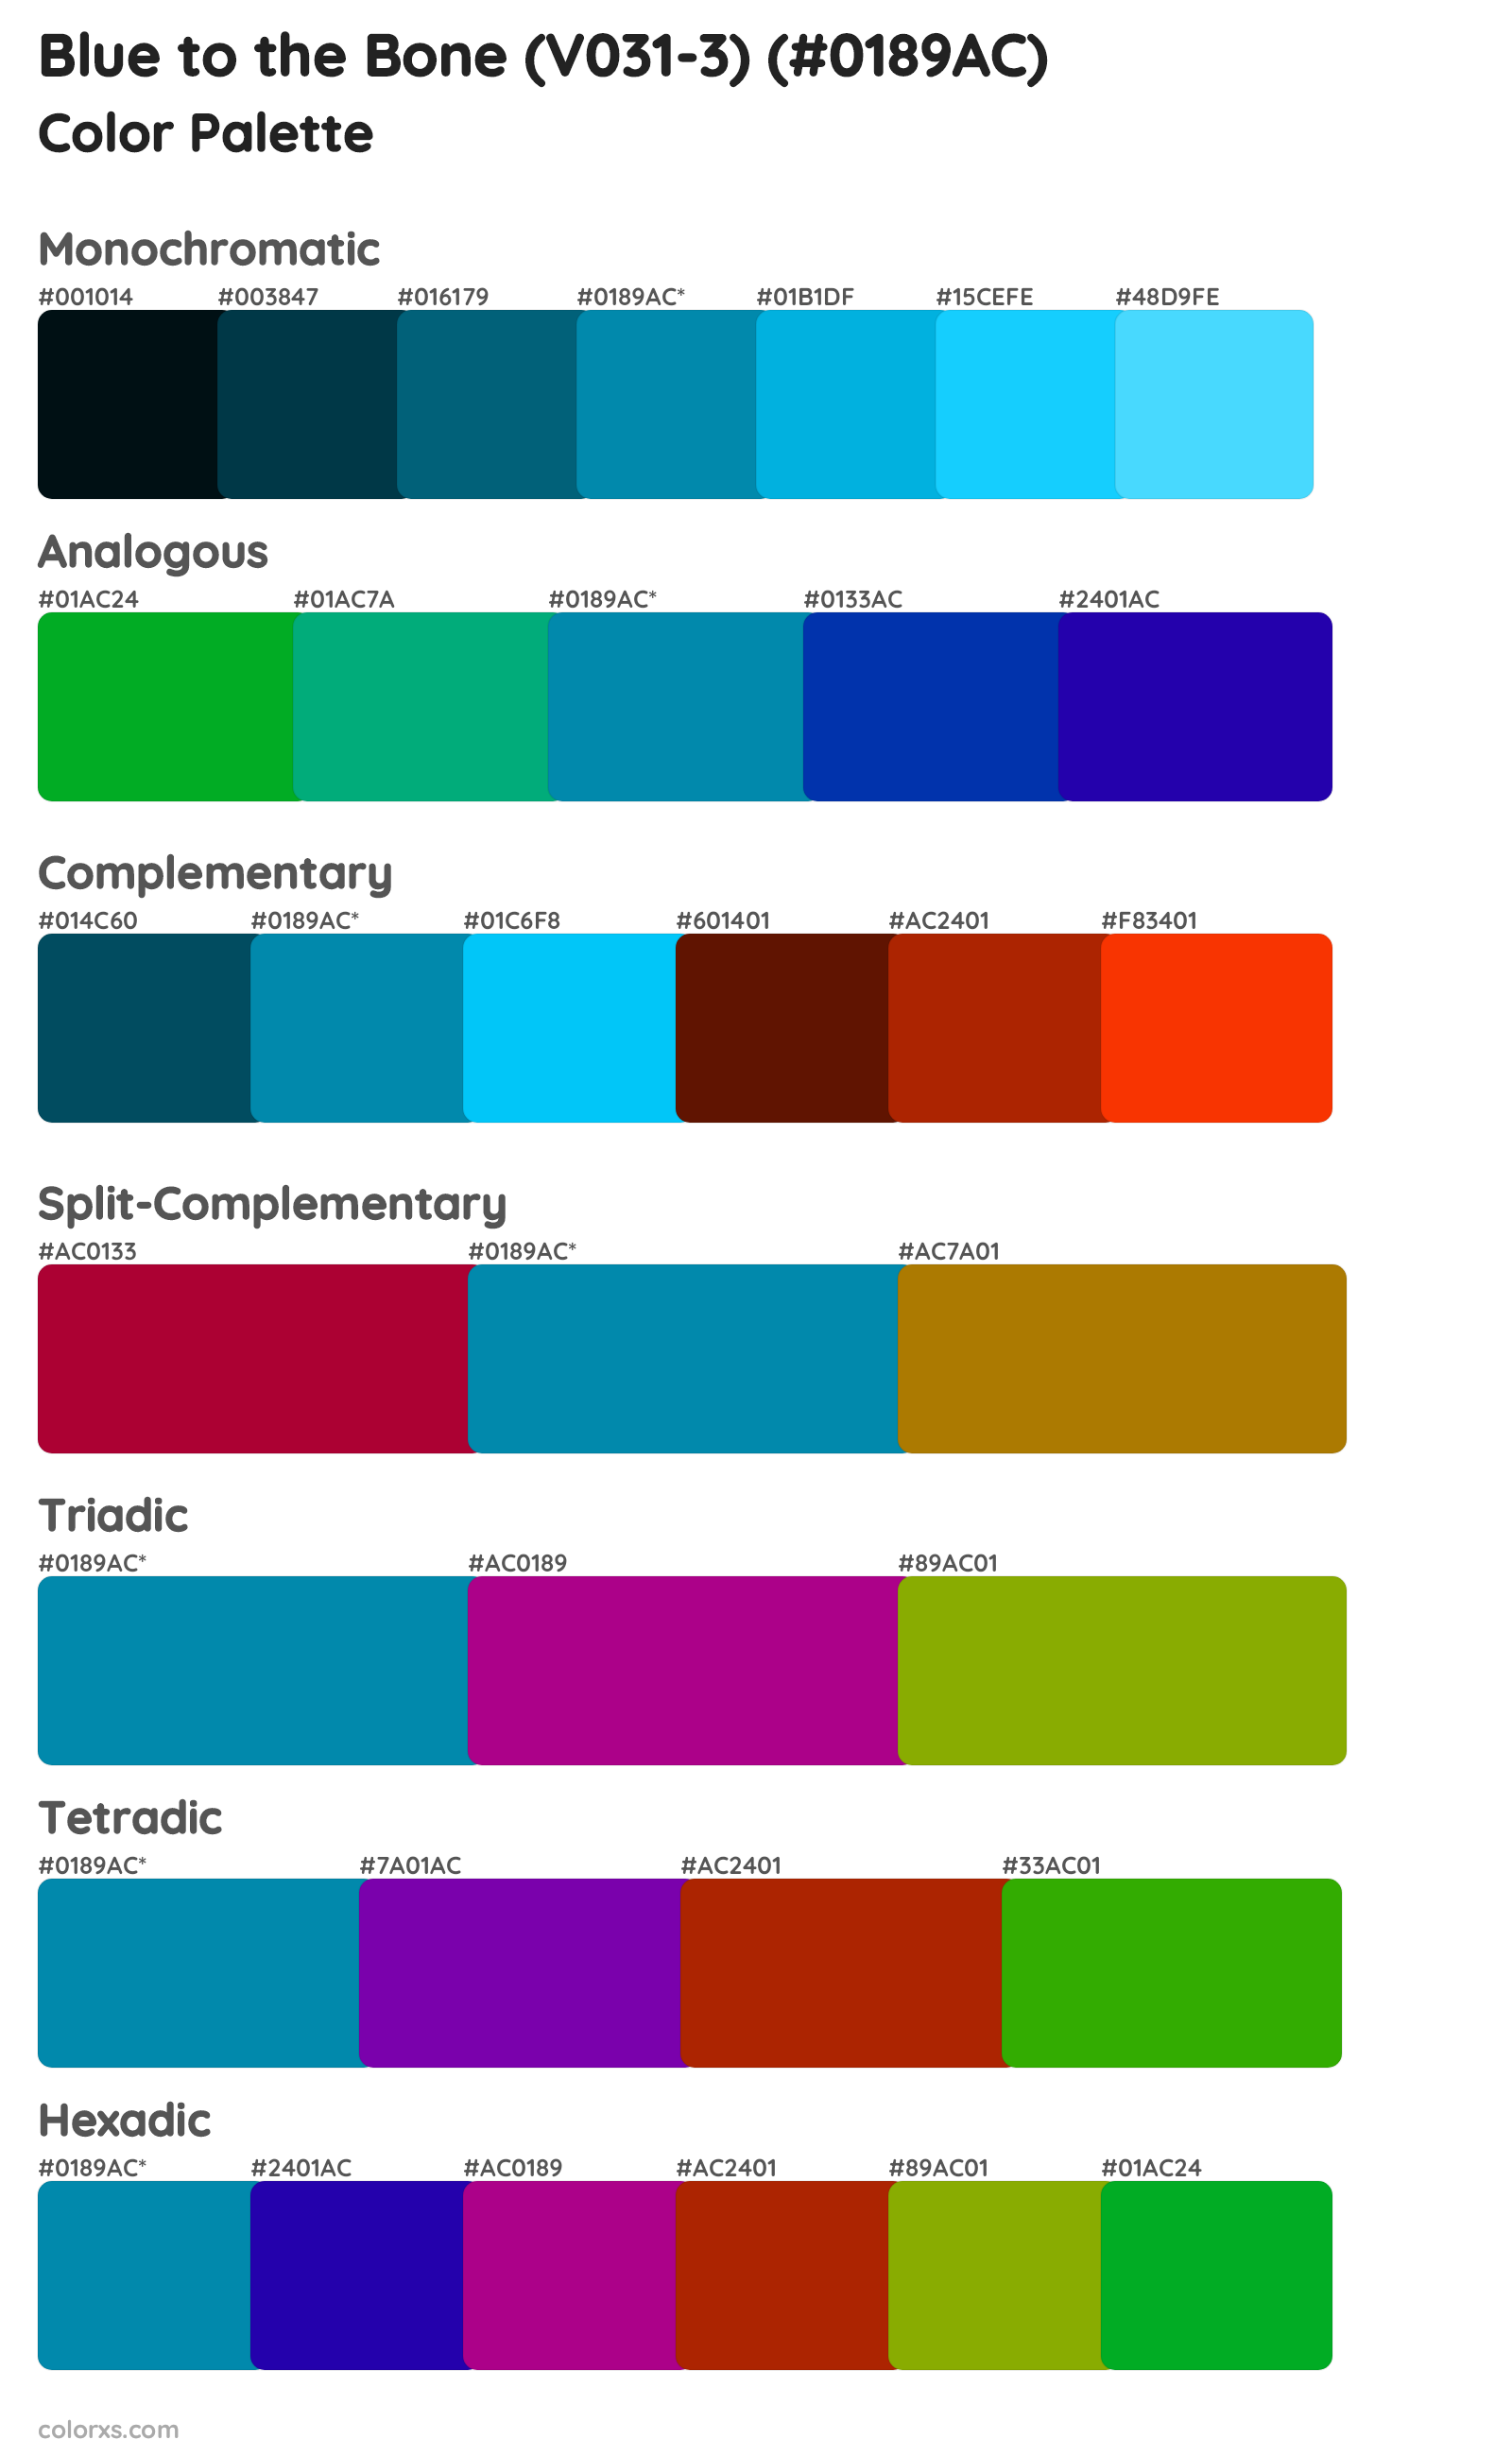 Blue to the Bone (V031-3) Color Scheme Palettes